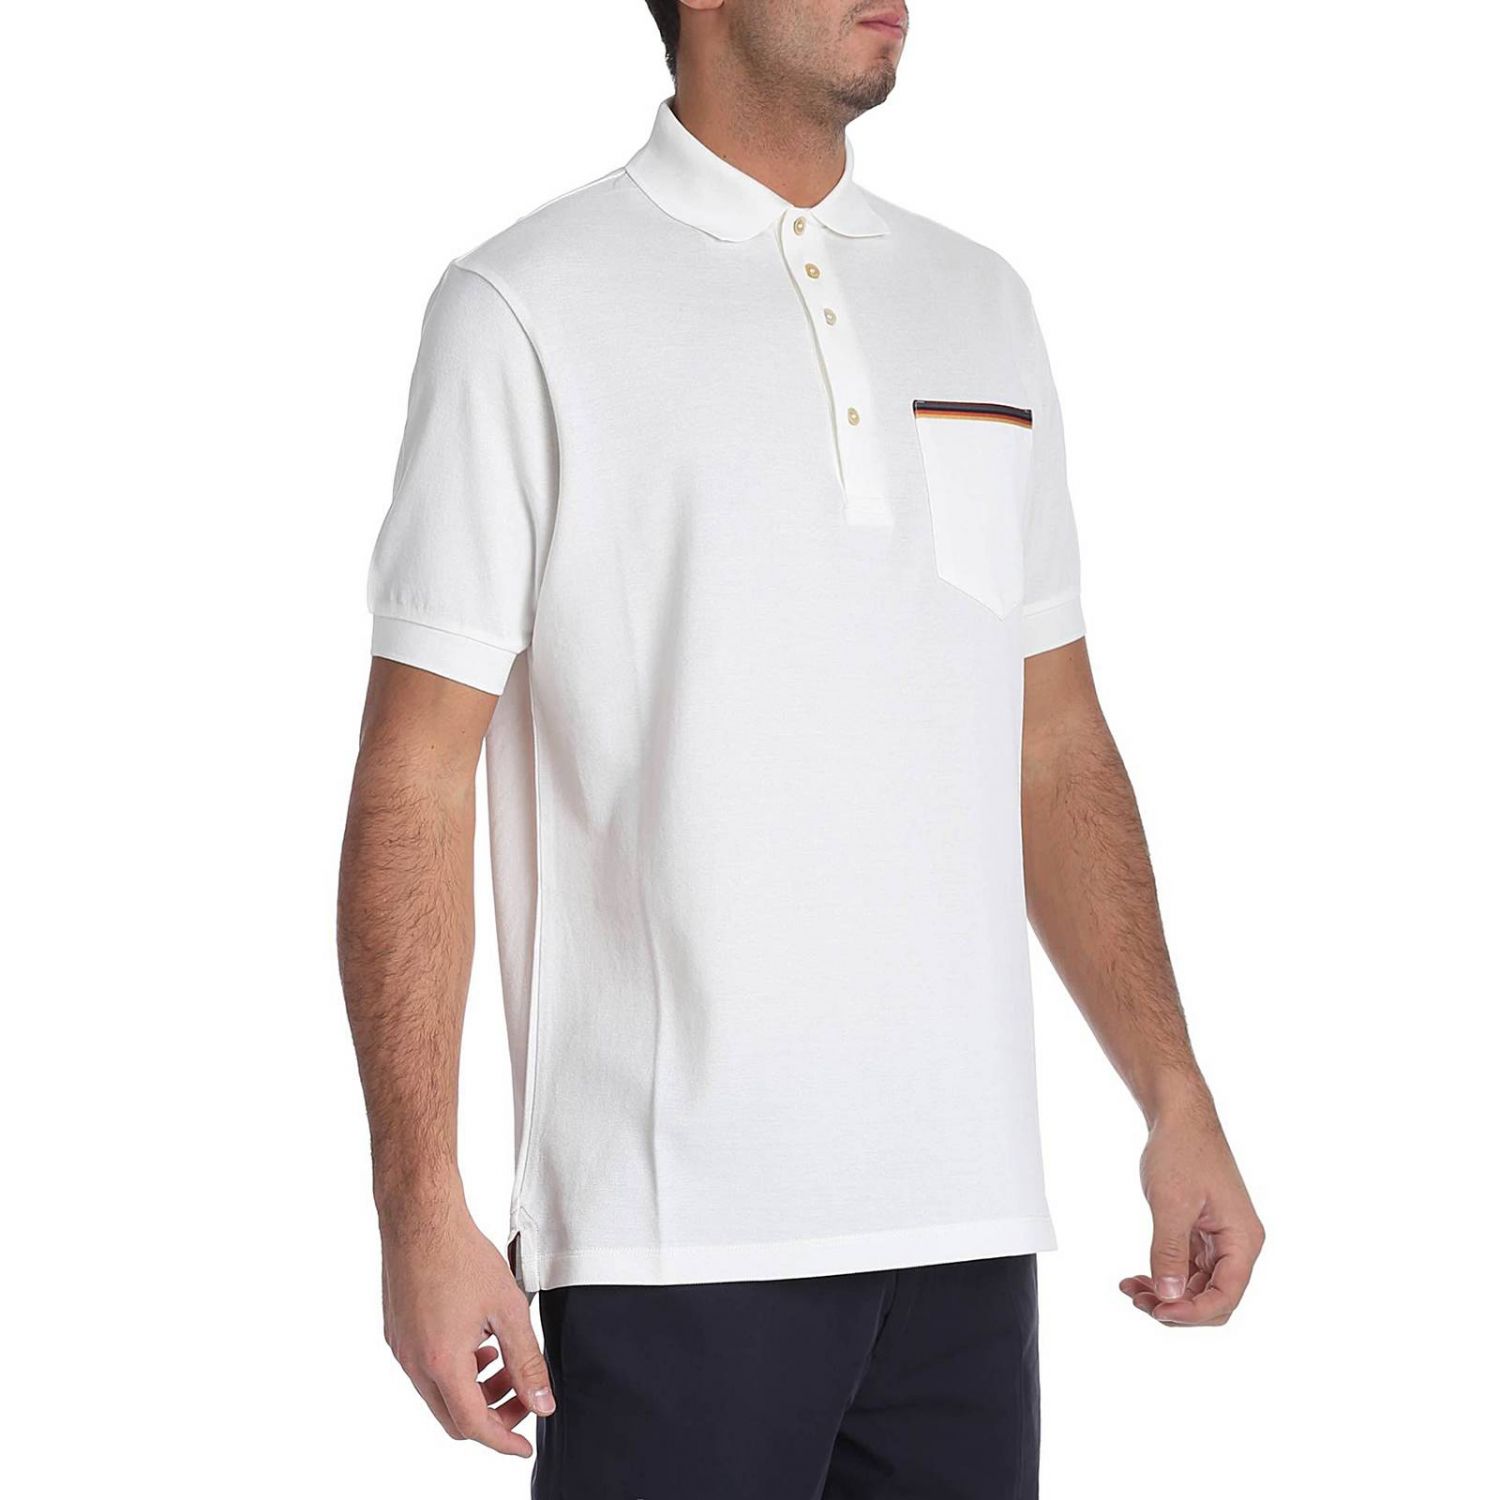 Paul Smith Outlet: T-shirt men London - White | T-Shirt Paul Smith M1R ...